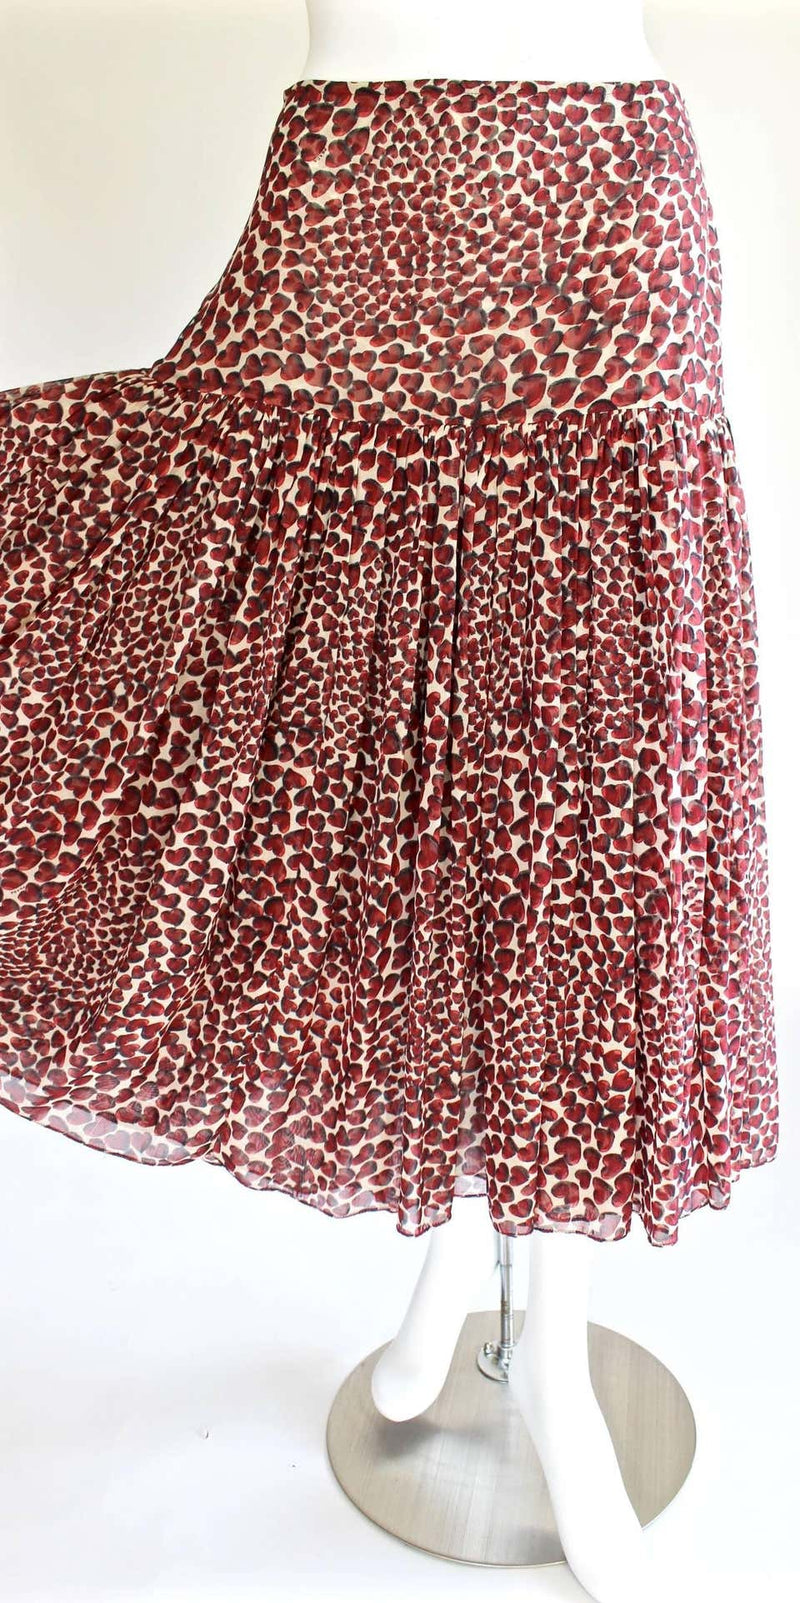 S/S 2000 Iconic Prada Heart Print Silk Skirt Rare and Collectable